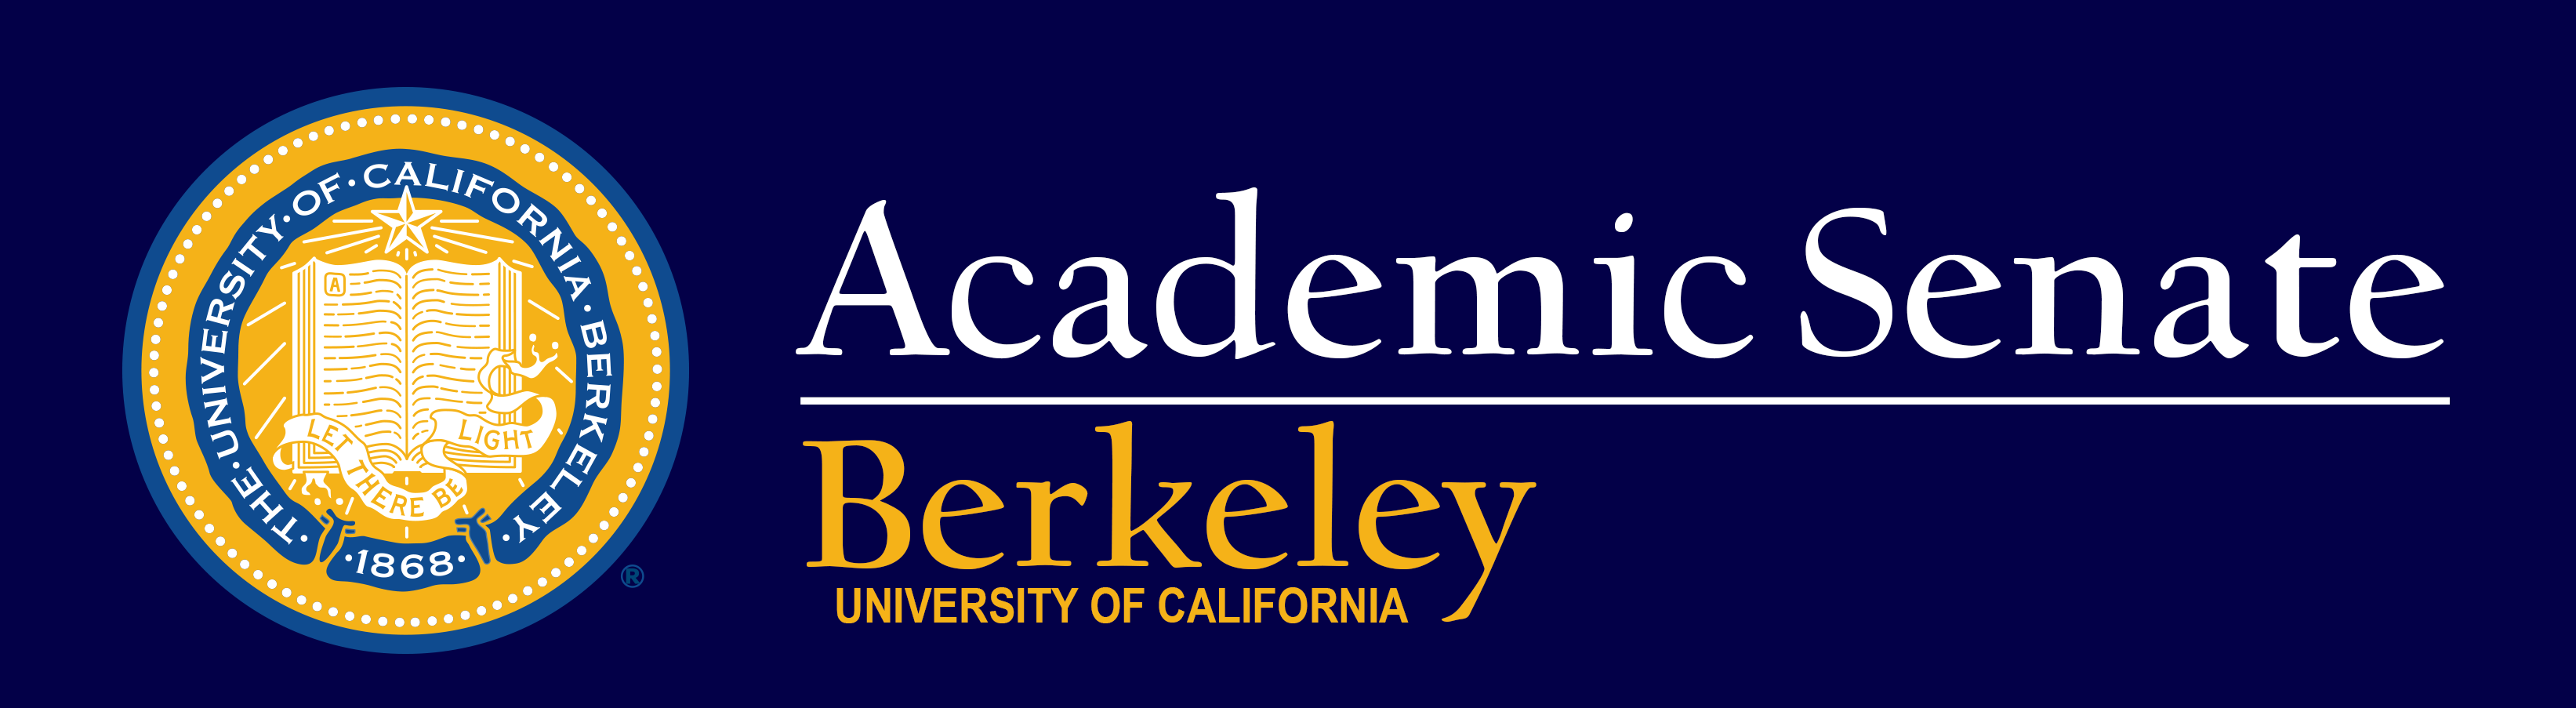 Academic Senate Logo with UC Berkeley navy and gold seal